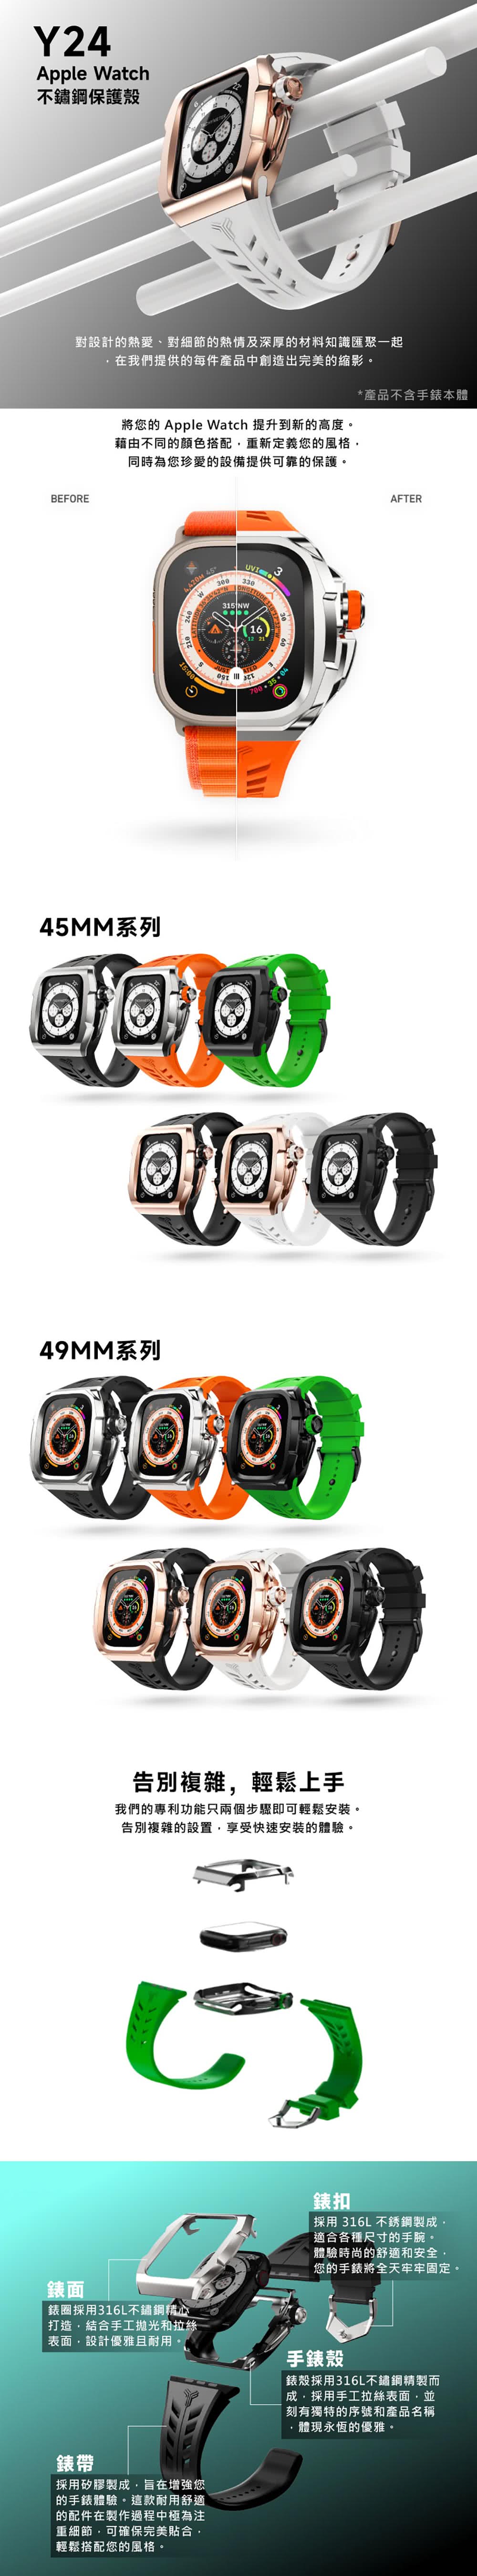 Y24 Apple Watch 45mm 不鏽鋼防水保護殼 